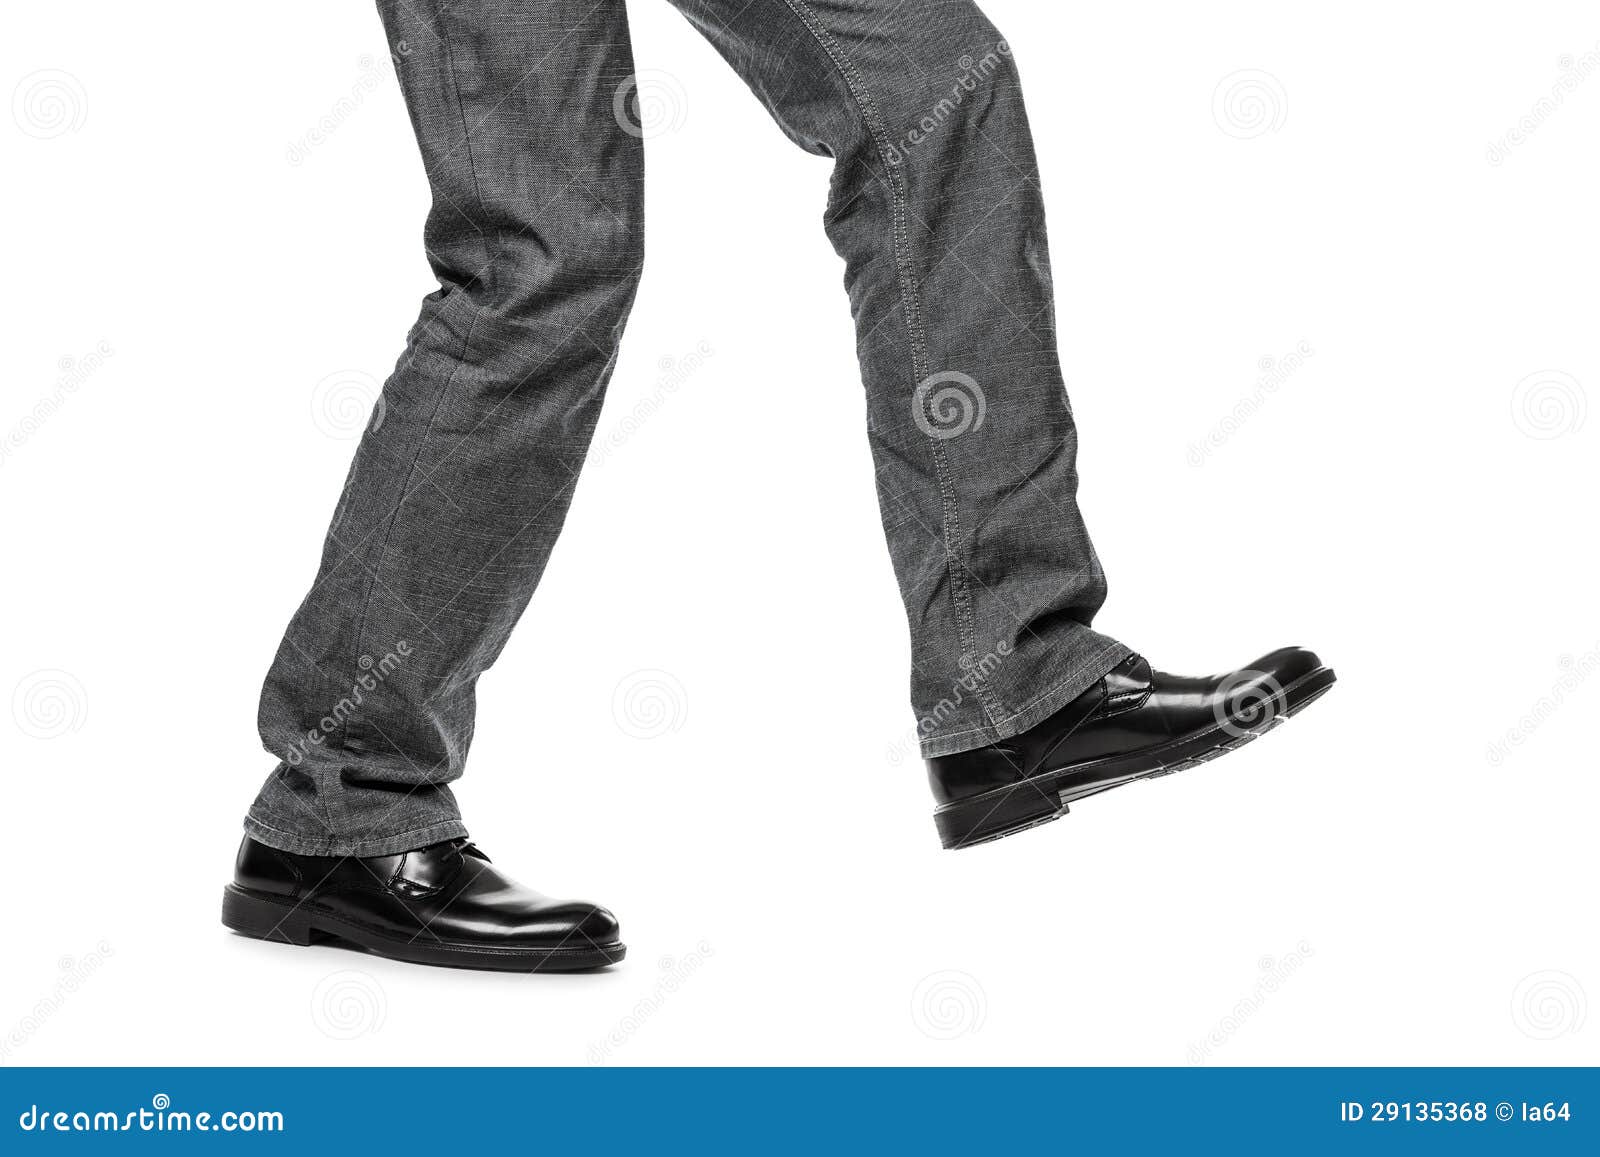 man in shoes walking step